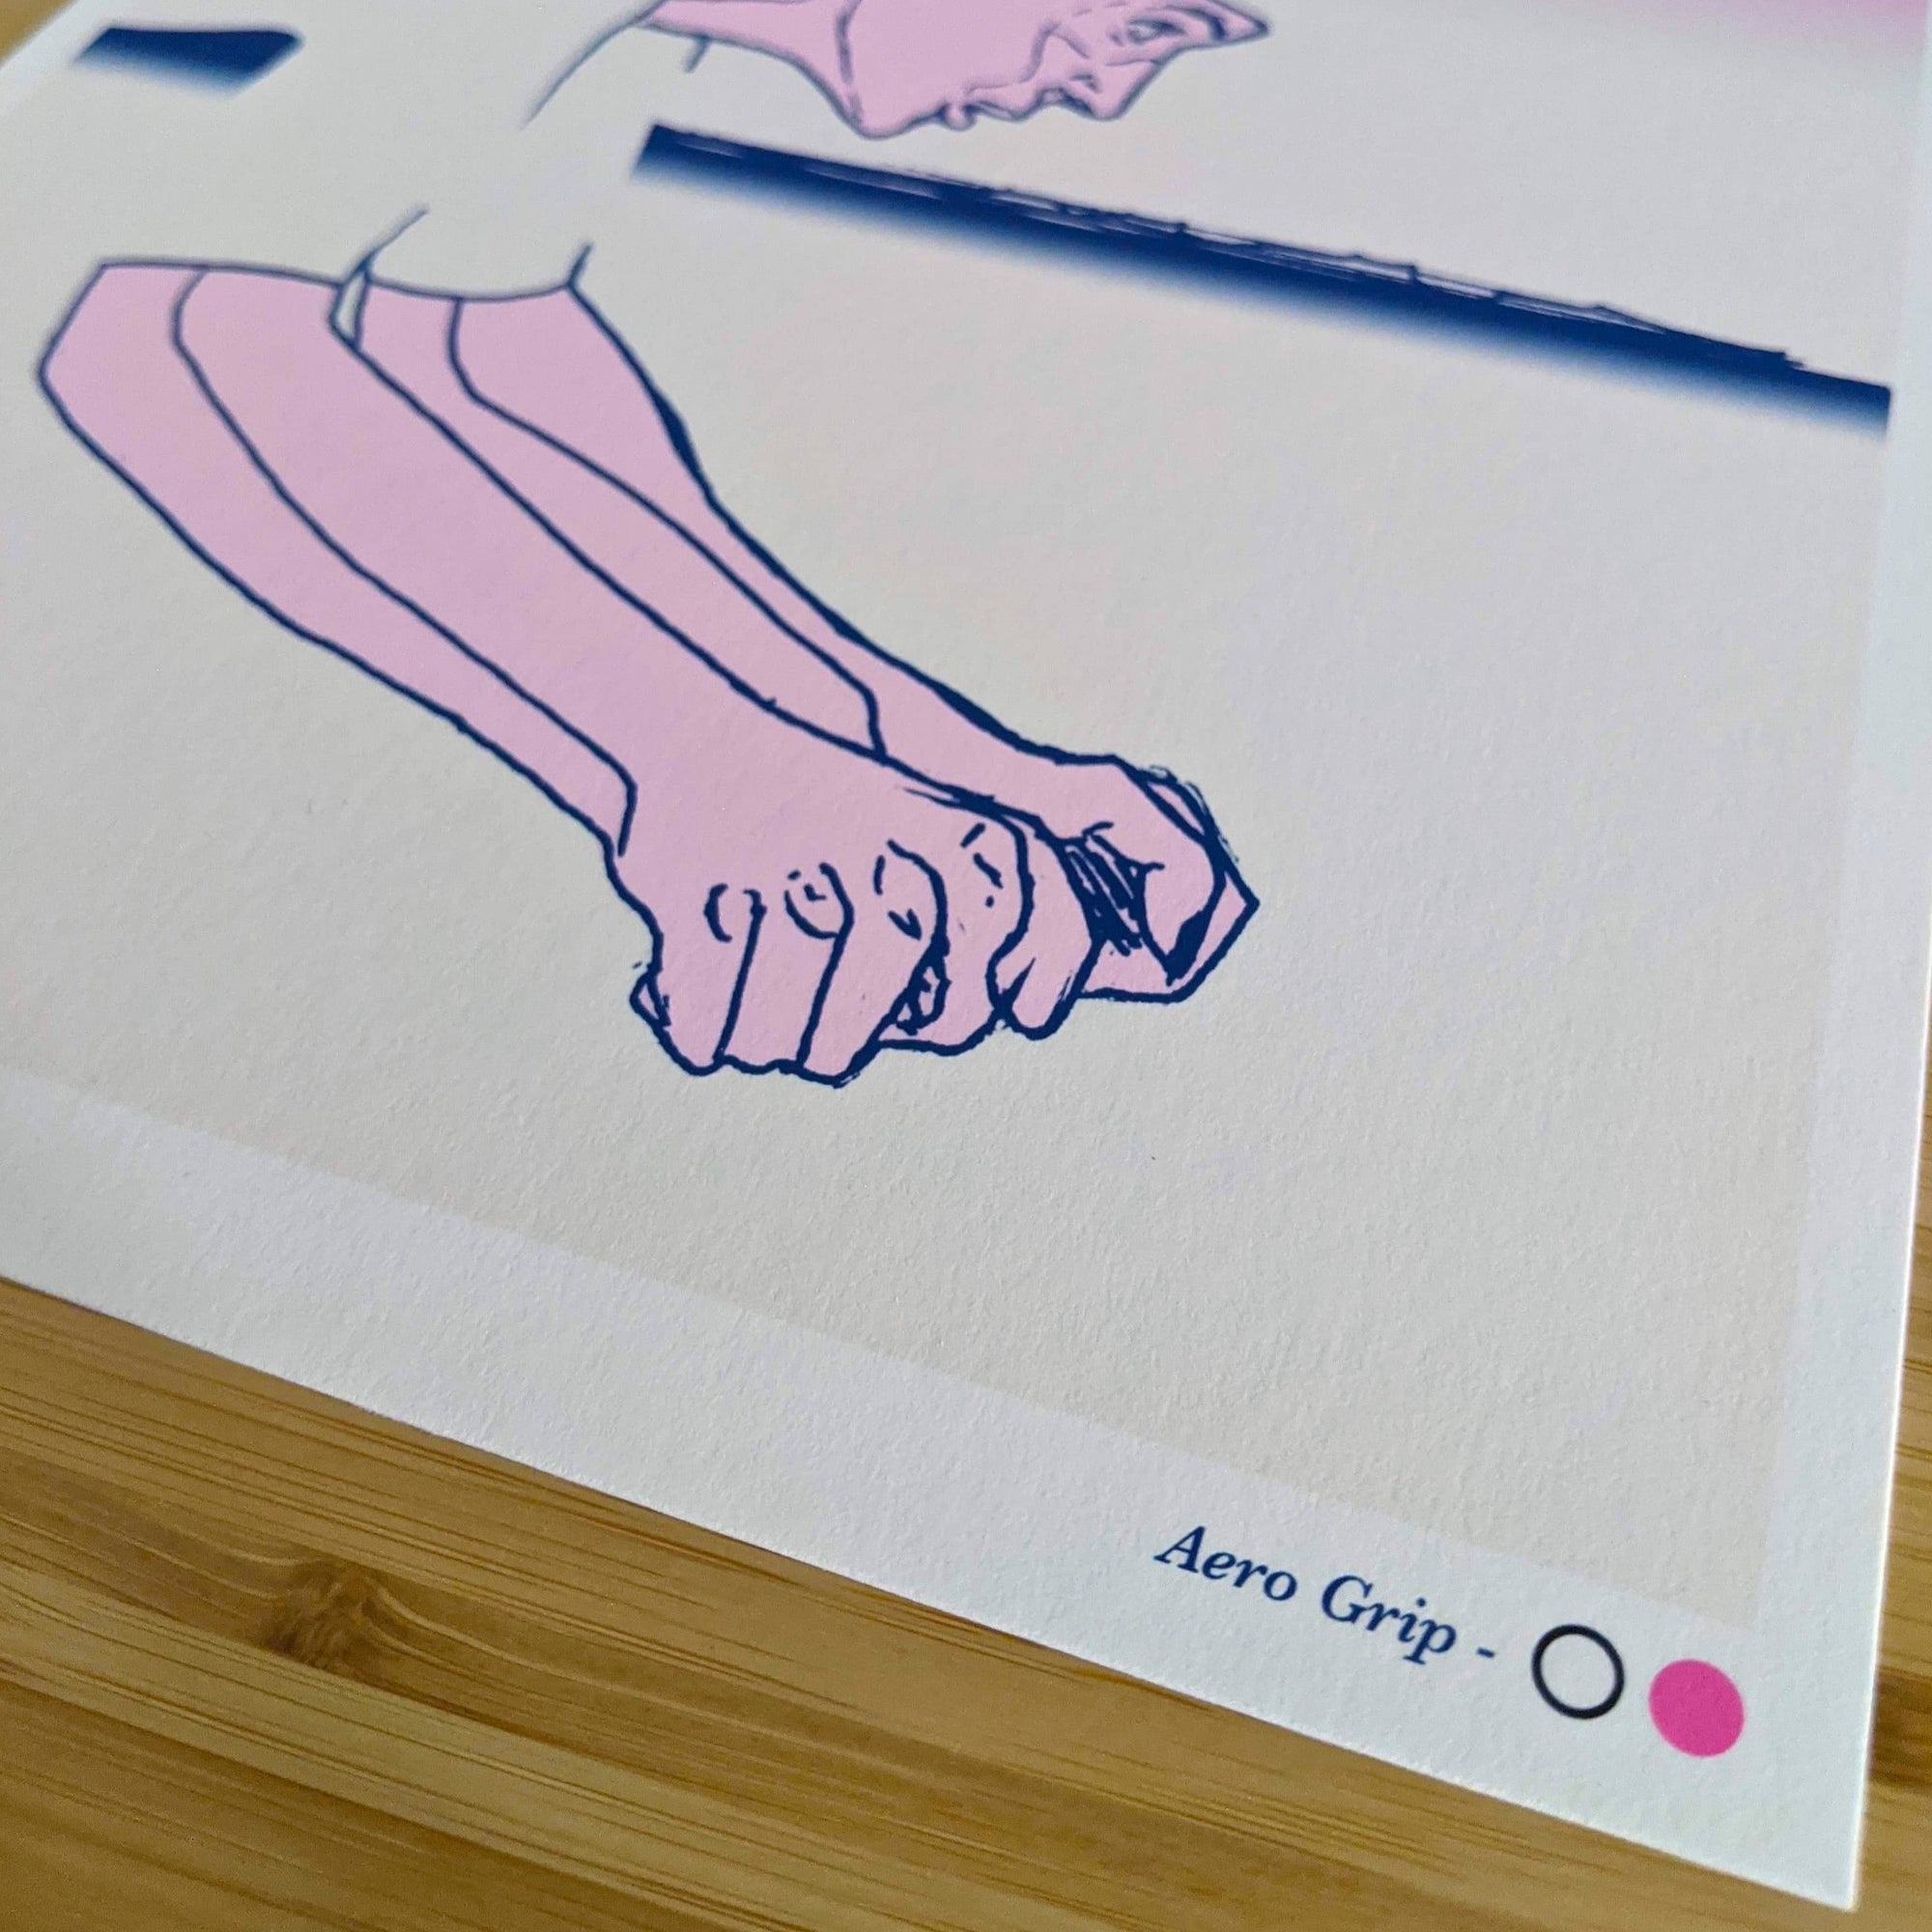 Aero Print by Ovso